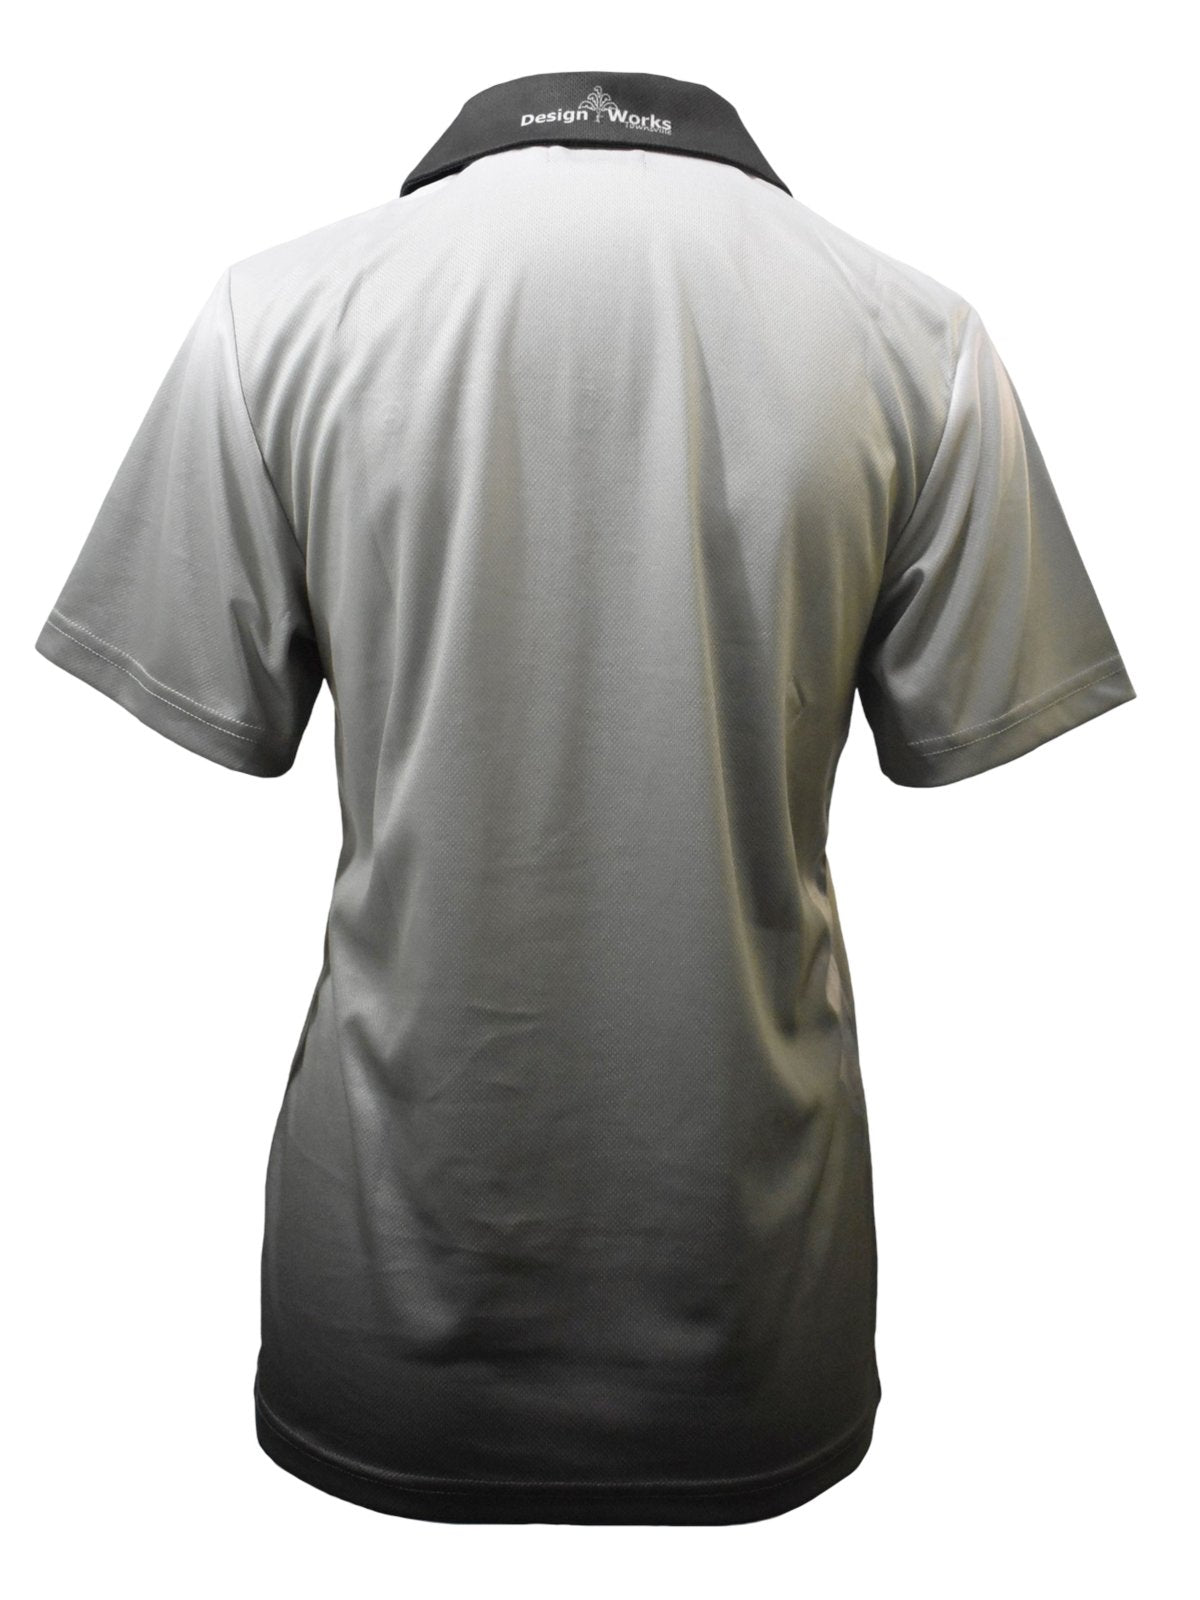 Adult Short Sleeve Shirt - Plain Grey - Design Works Apparel